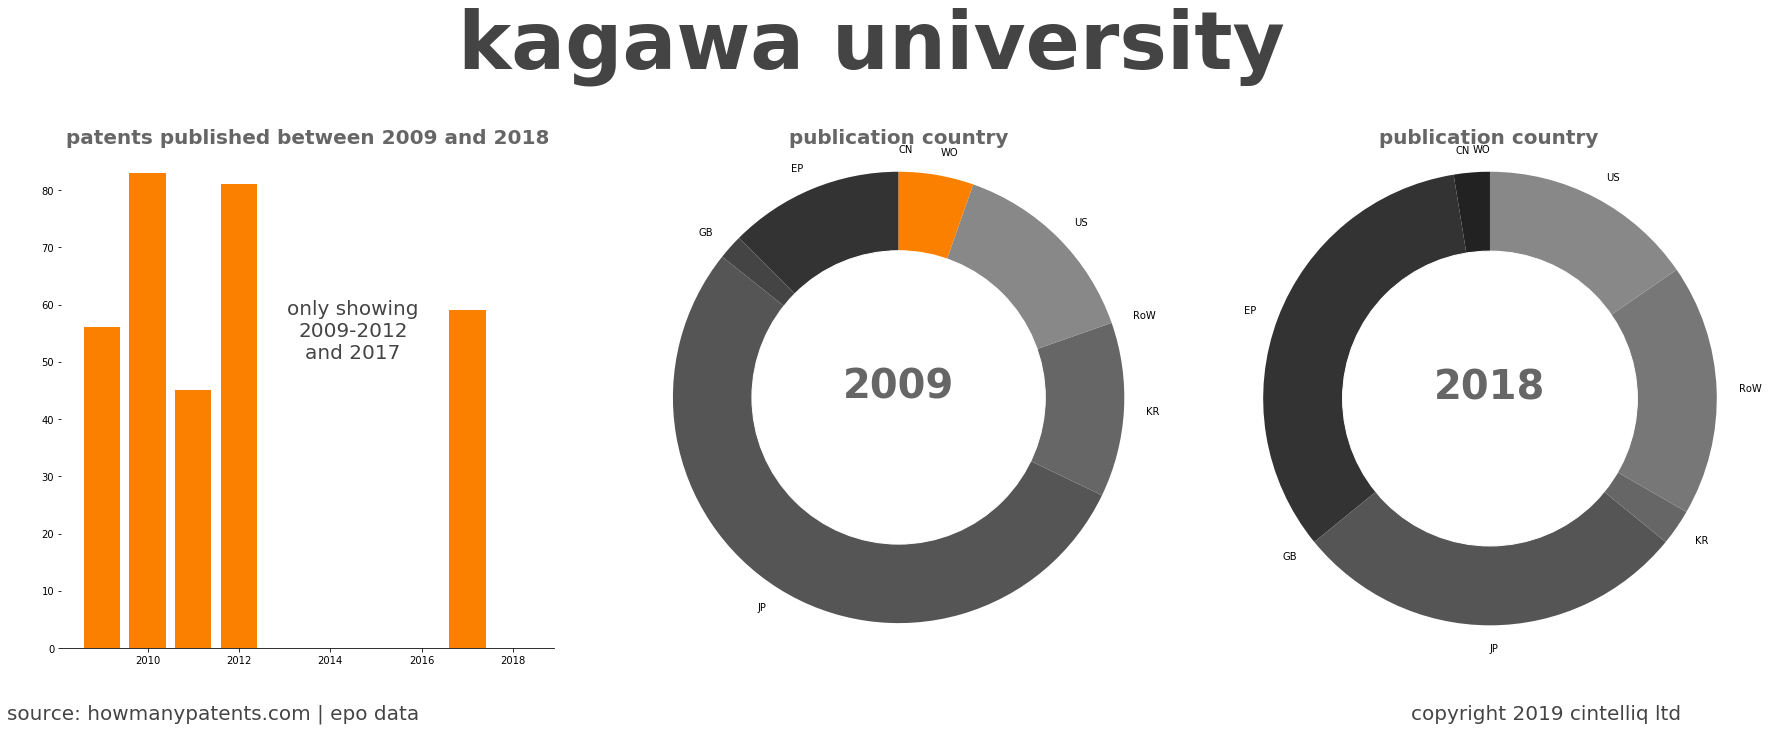 summary of patents for Kagawa University